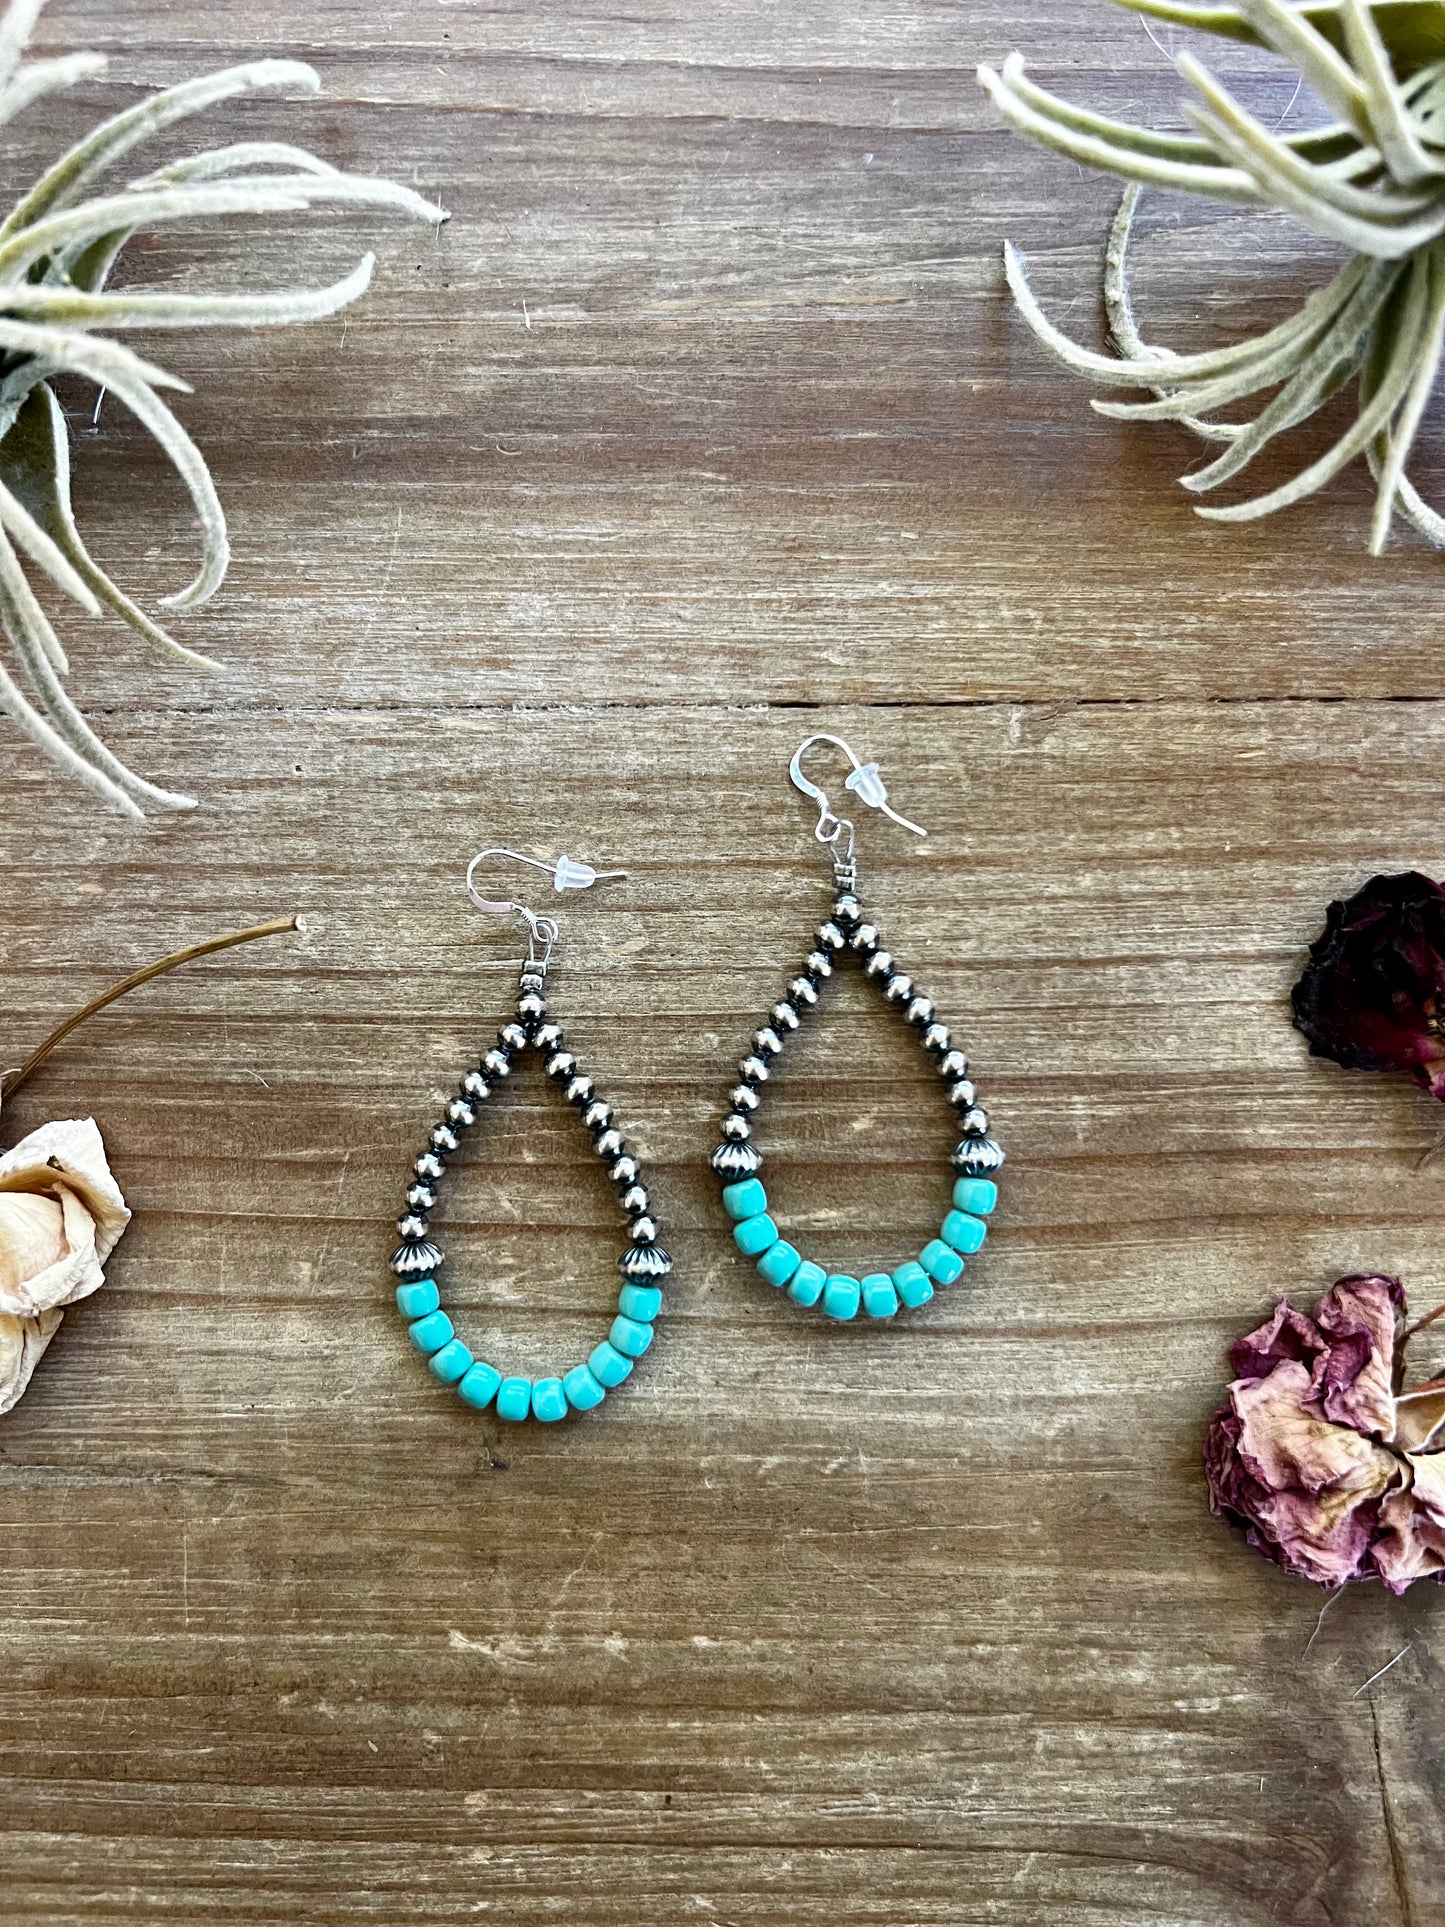 American turquoise teardrop earrings with navajo